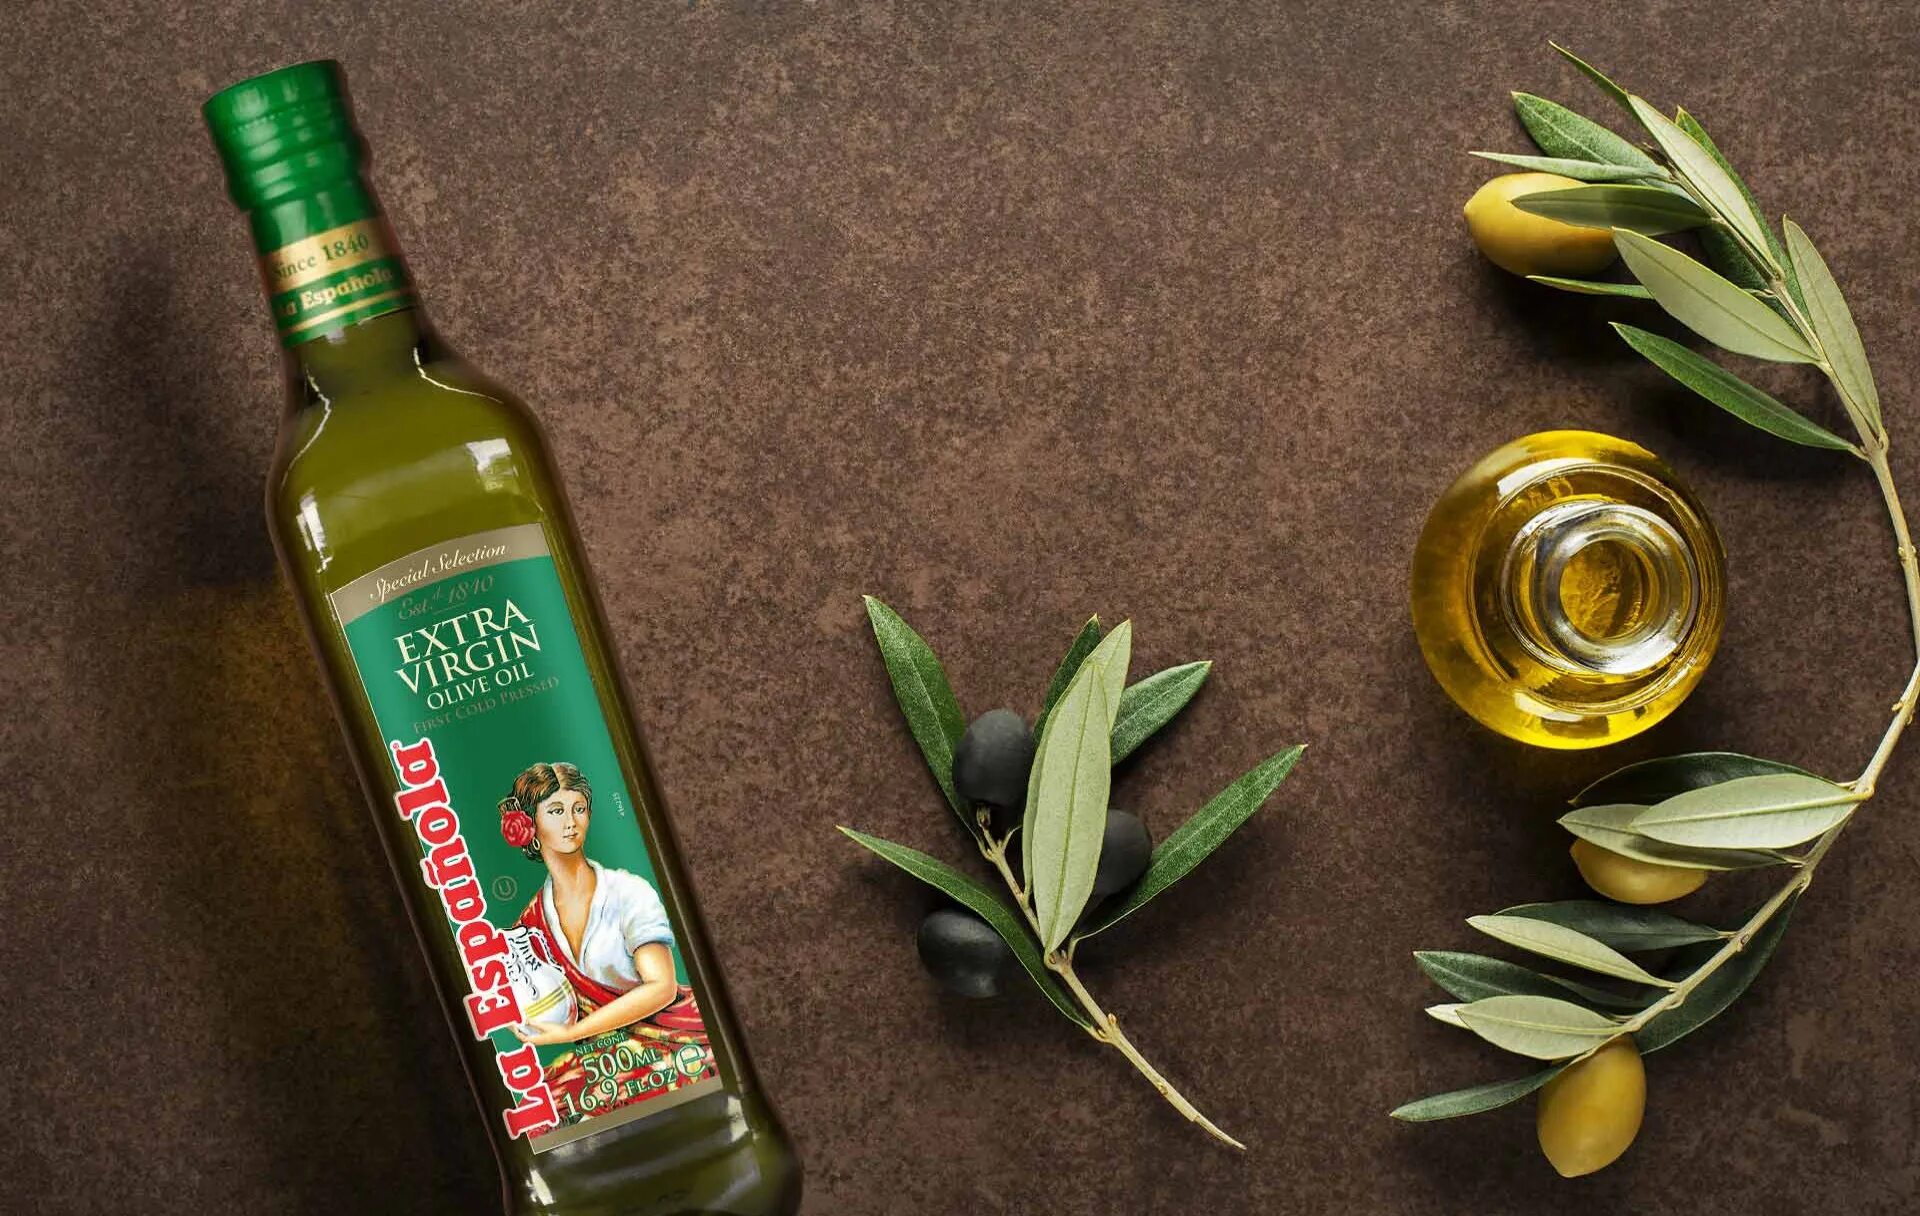 Olive Oil масло оливковое. San Michele Olive Oil. Олив Ойл масло оливковое. Оливки и оливковое масло. Лавровый лист оливковое масло